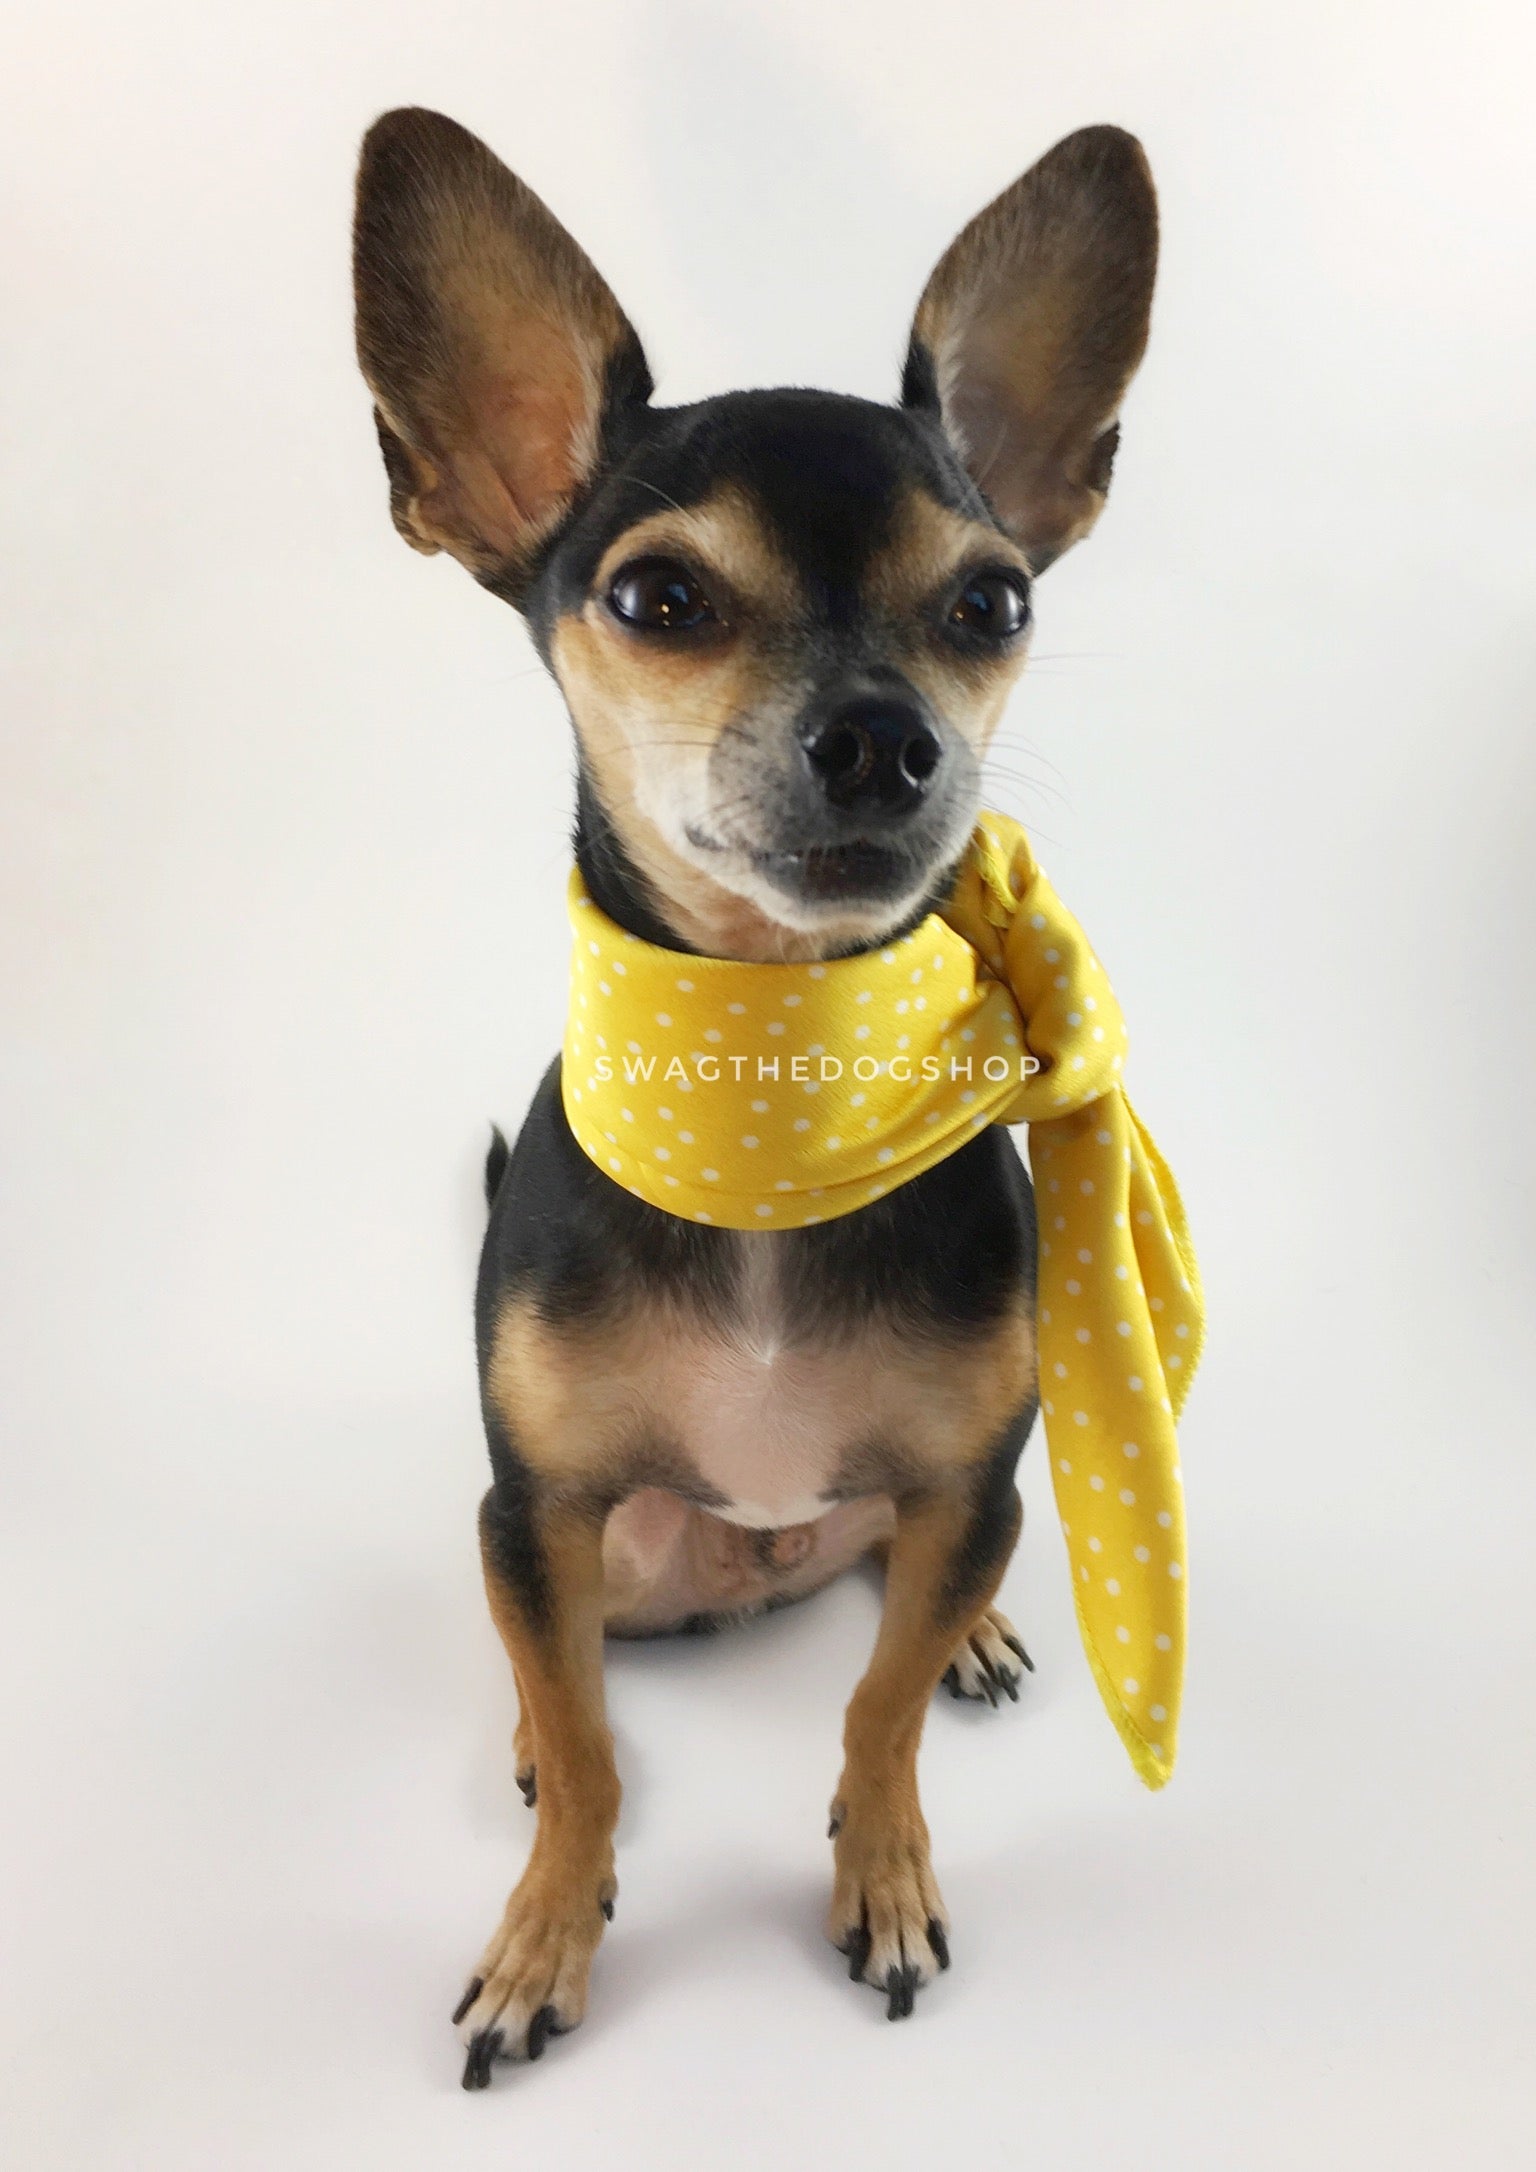 Polka Itty Bitty Sunny Yellow Swagdana Scarf - Full Frontal View of Cute Chihuahua Wearing Swagdana Scarf as Neckerchief. Dog Bandana. Dog Scarf.